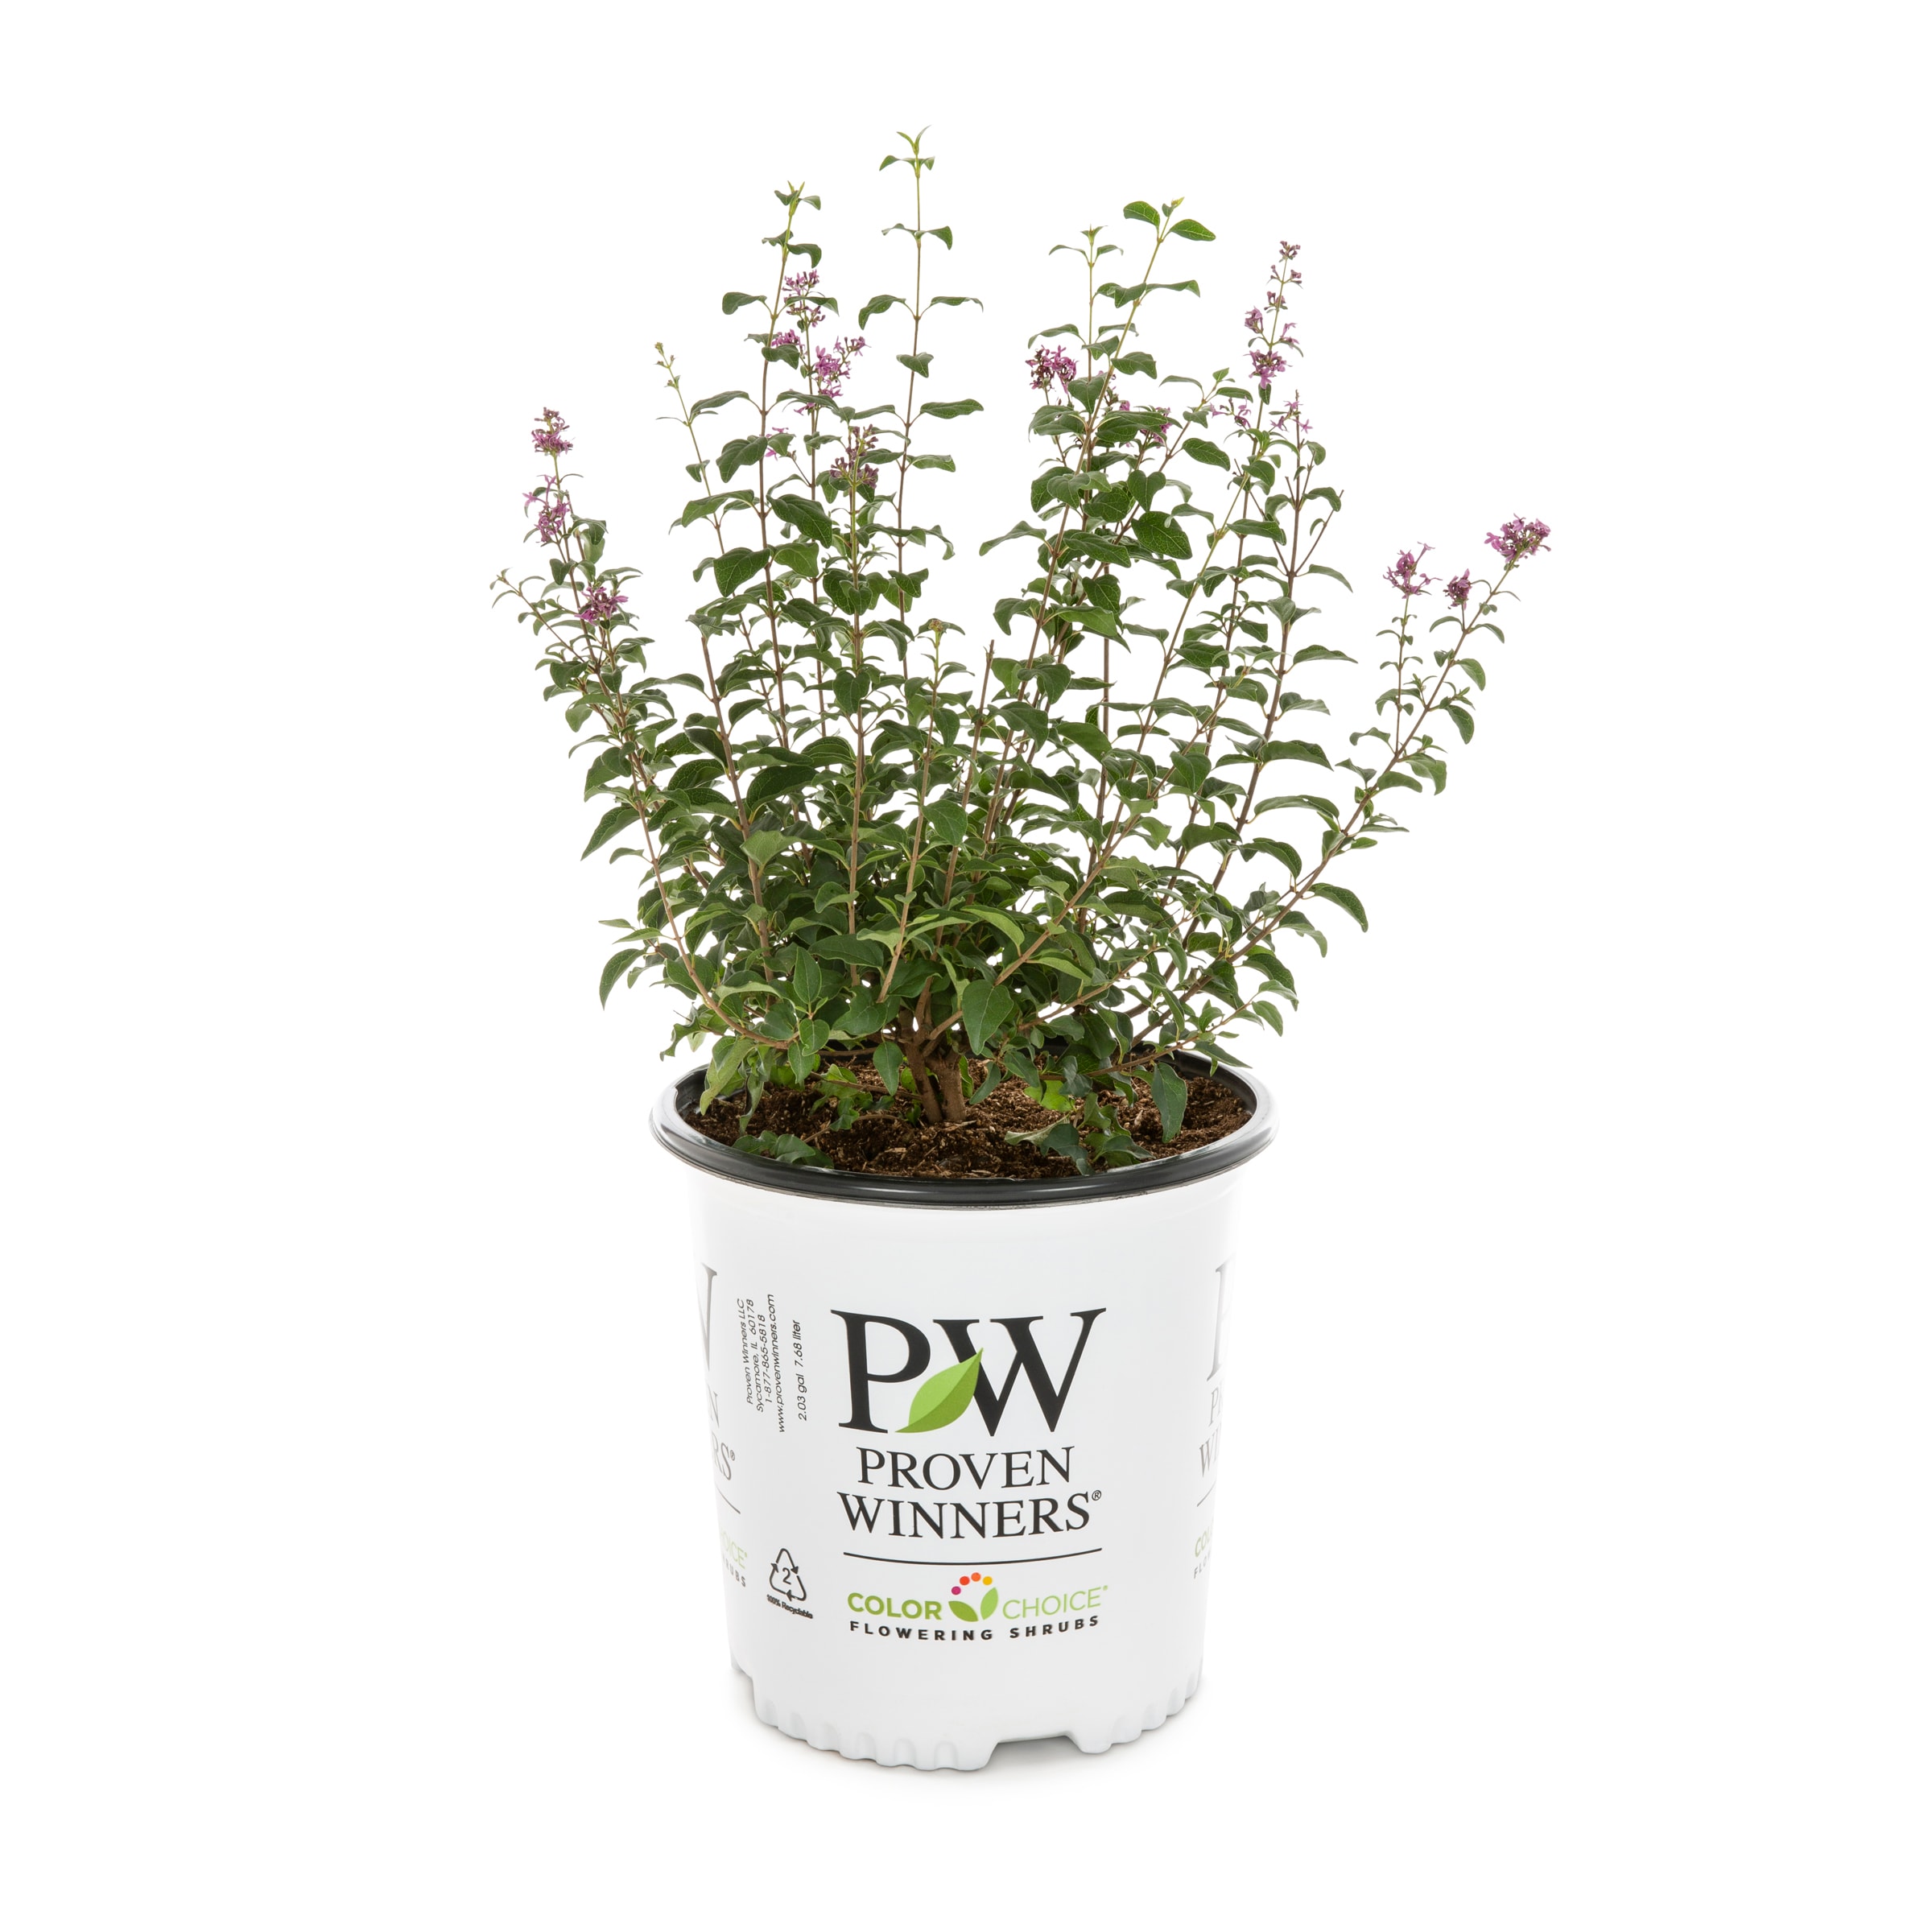 Proven Winners Lilac Bloomerang Pw Flowering Shrub in 20 Gallon Pot ...